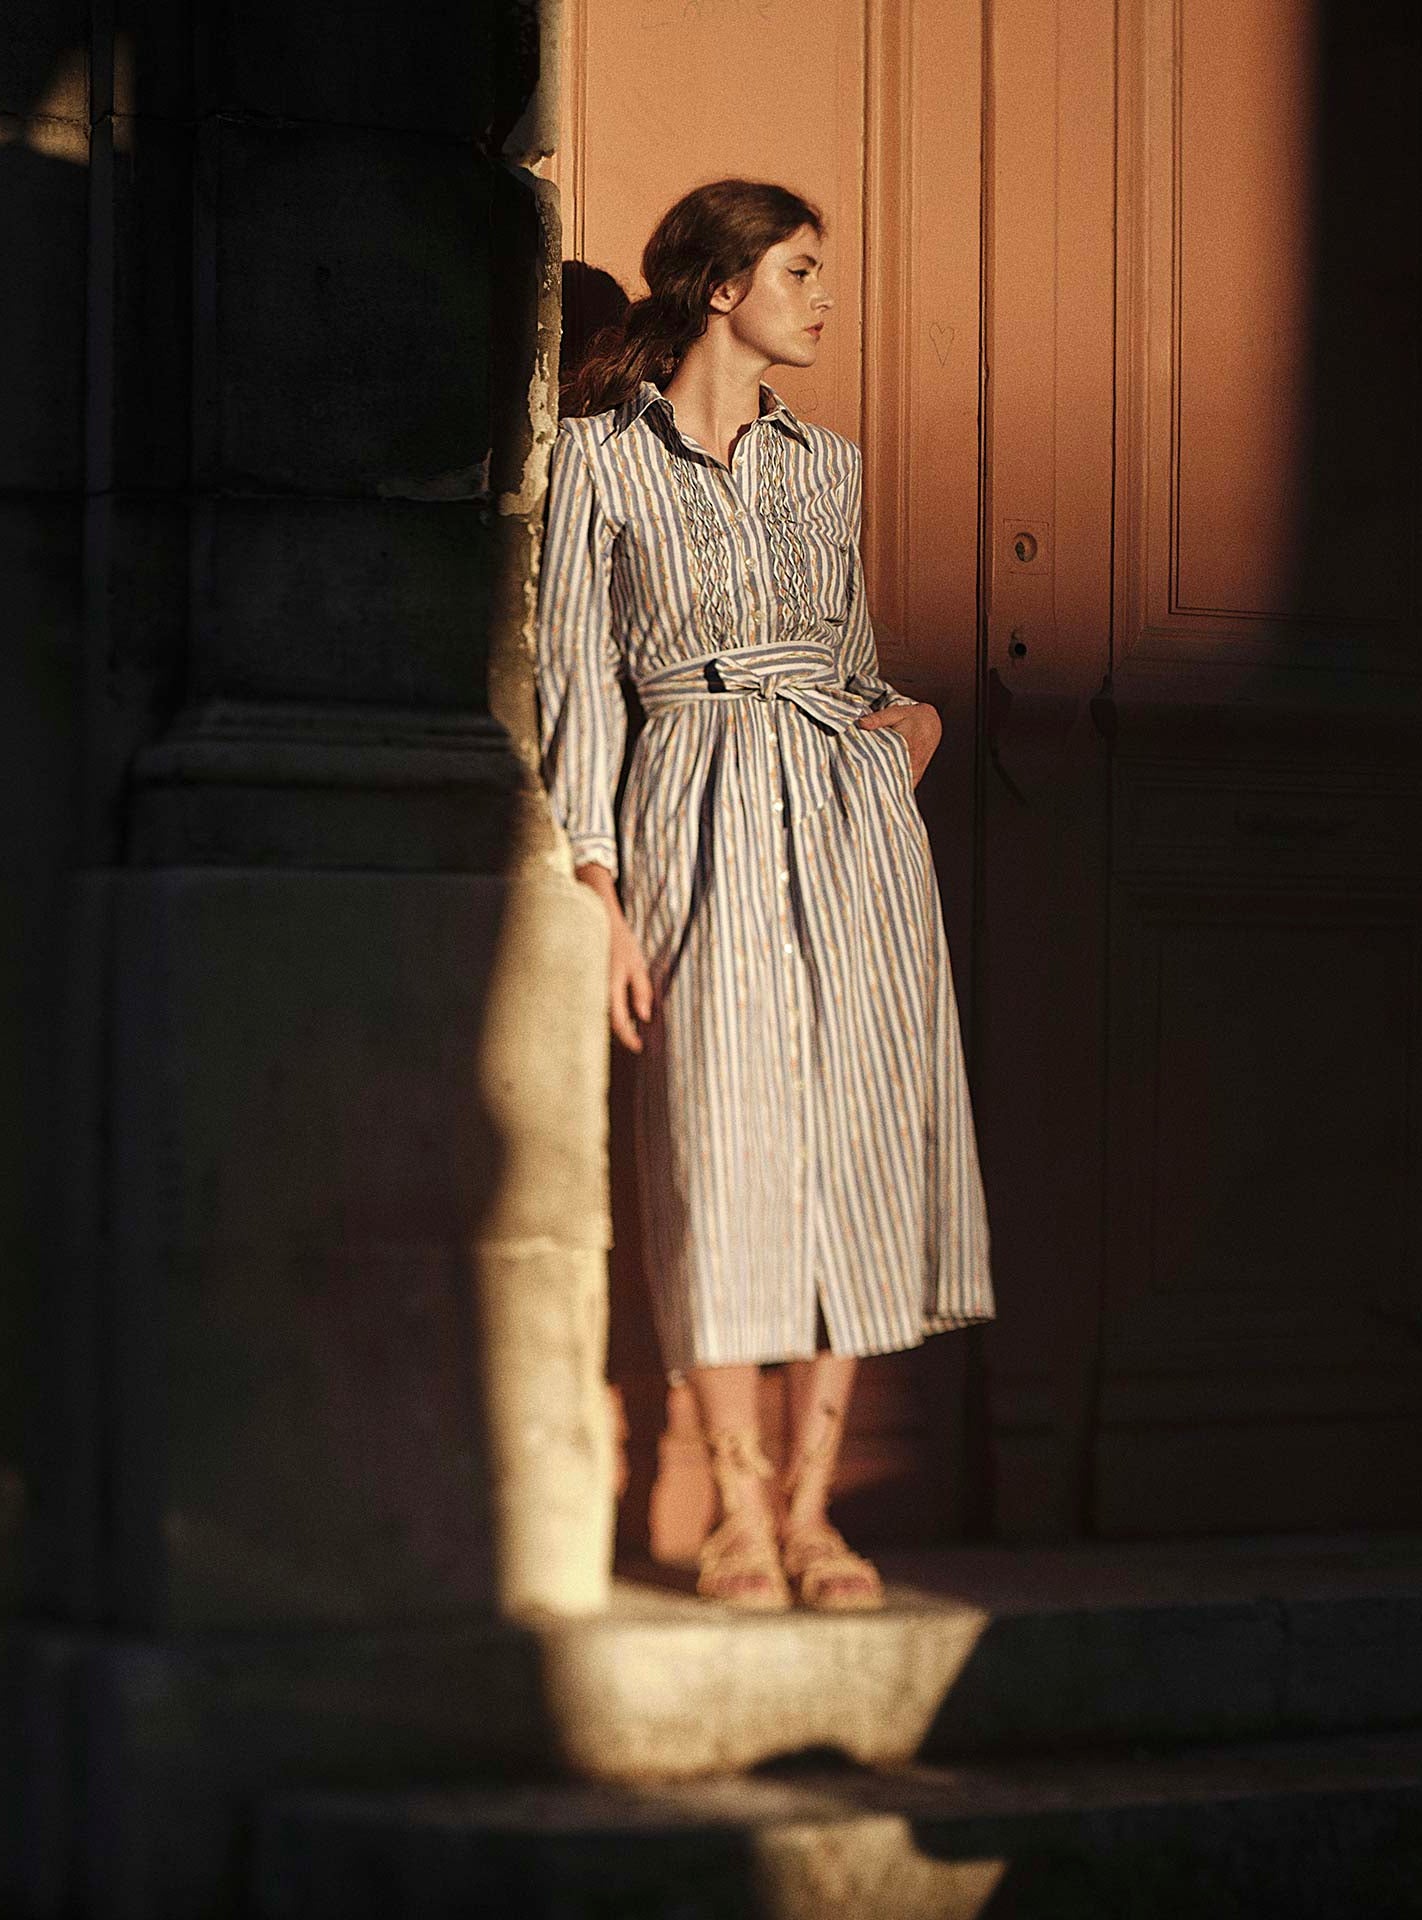 Anna wearing a Wilda Shirt Dress by Thierry Colson photographed by Stéphane Gautronneau